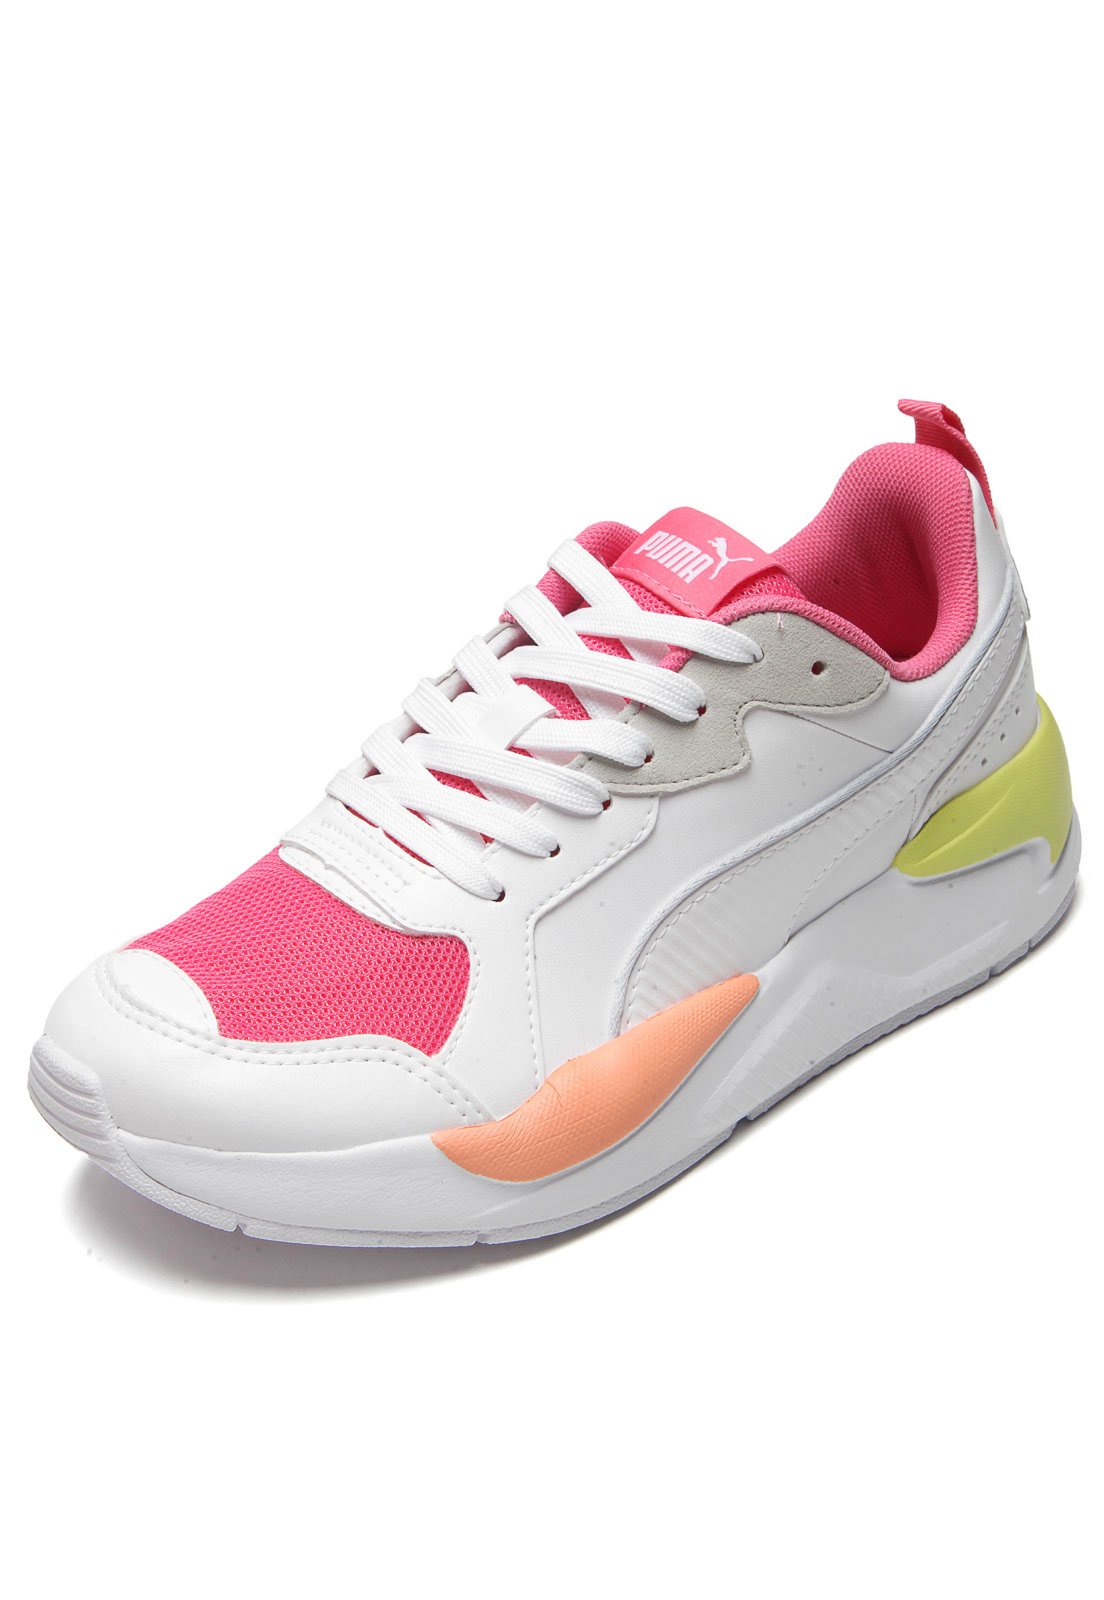 tenis puma feminino branco e rosa